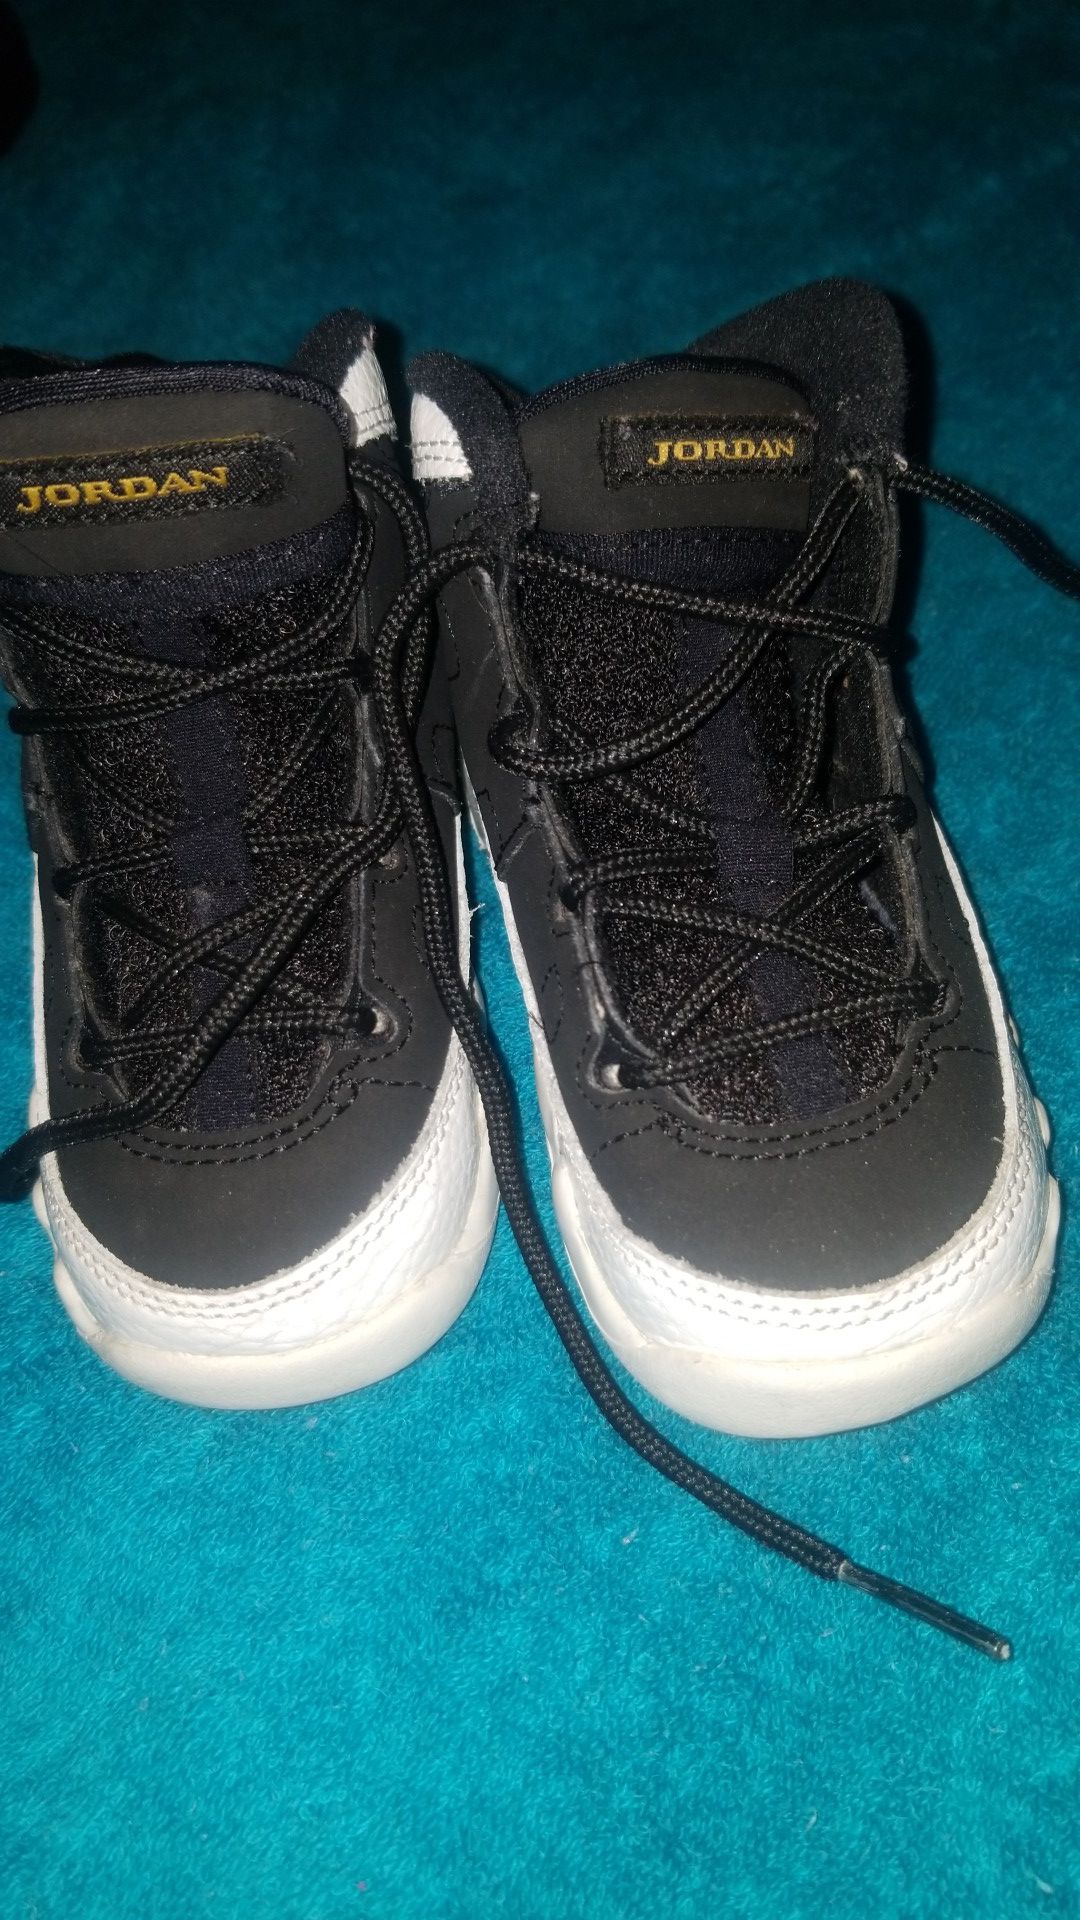 Baby Jordan shoes size 6c